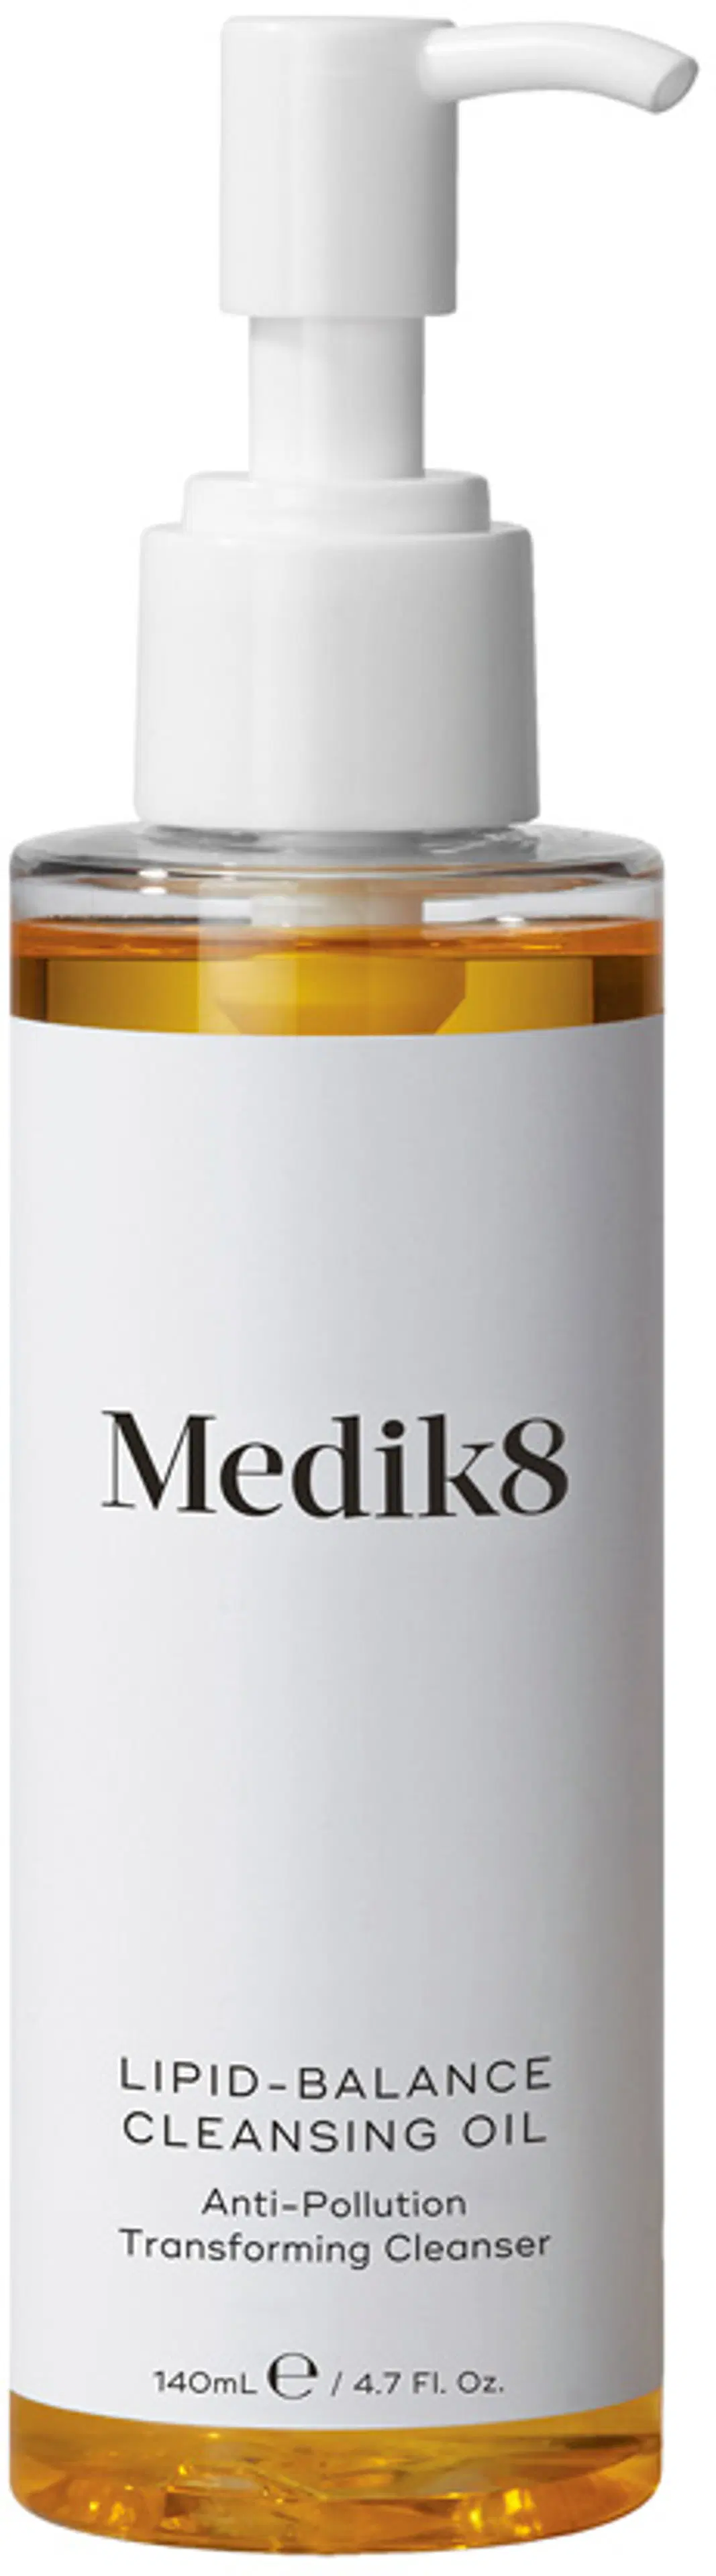 Medik8 Lipid-Balance Cleansing Oil puhdistusöljy 140 ml